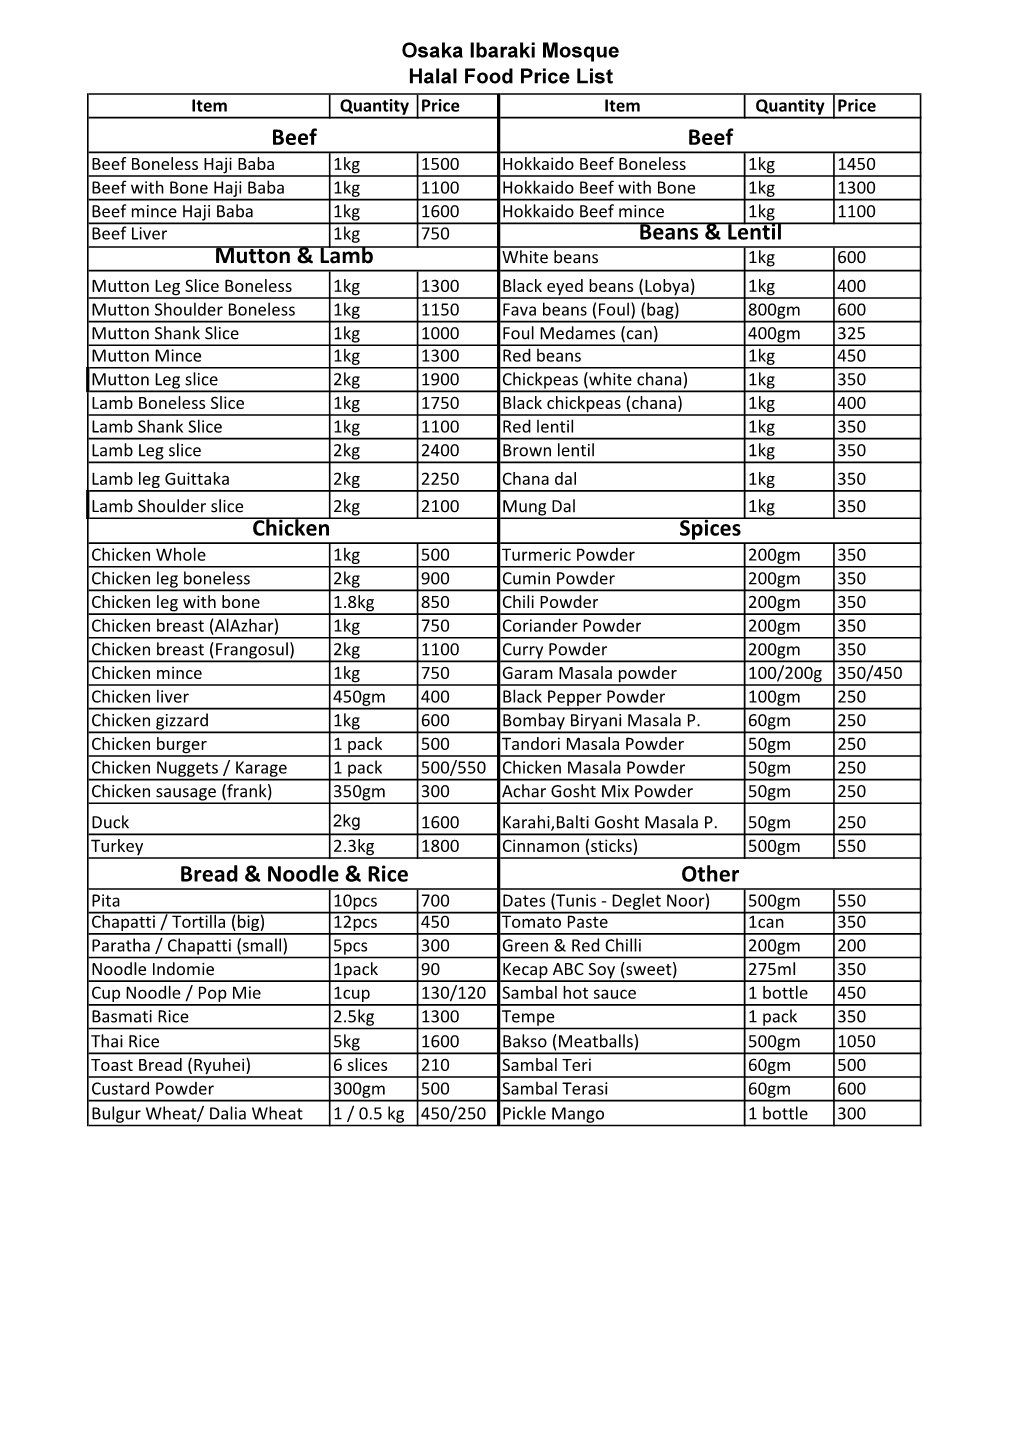 Copy of Halal Price List.Xlsx